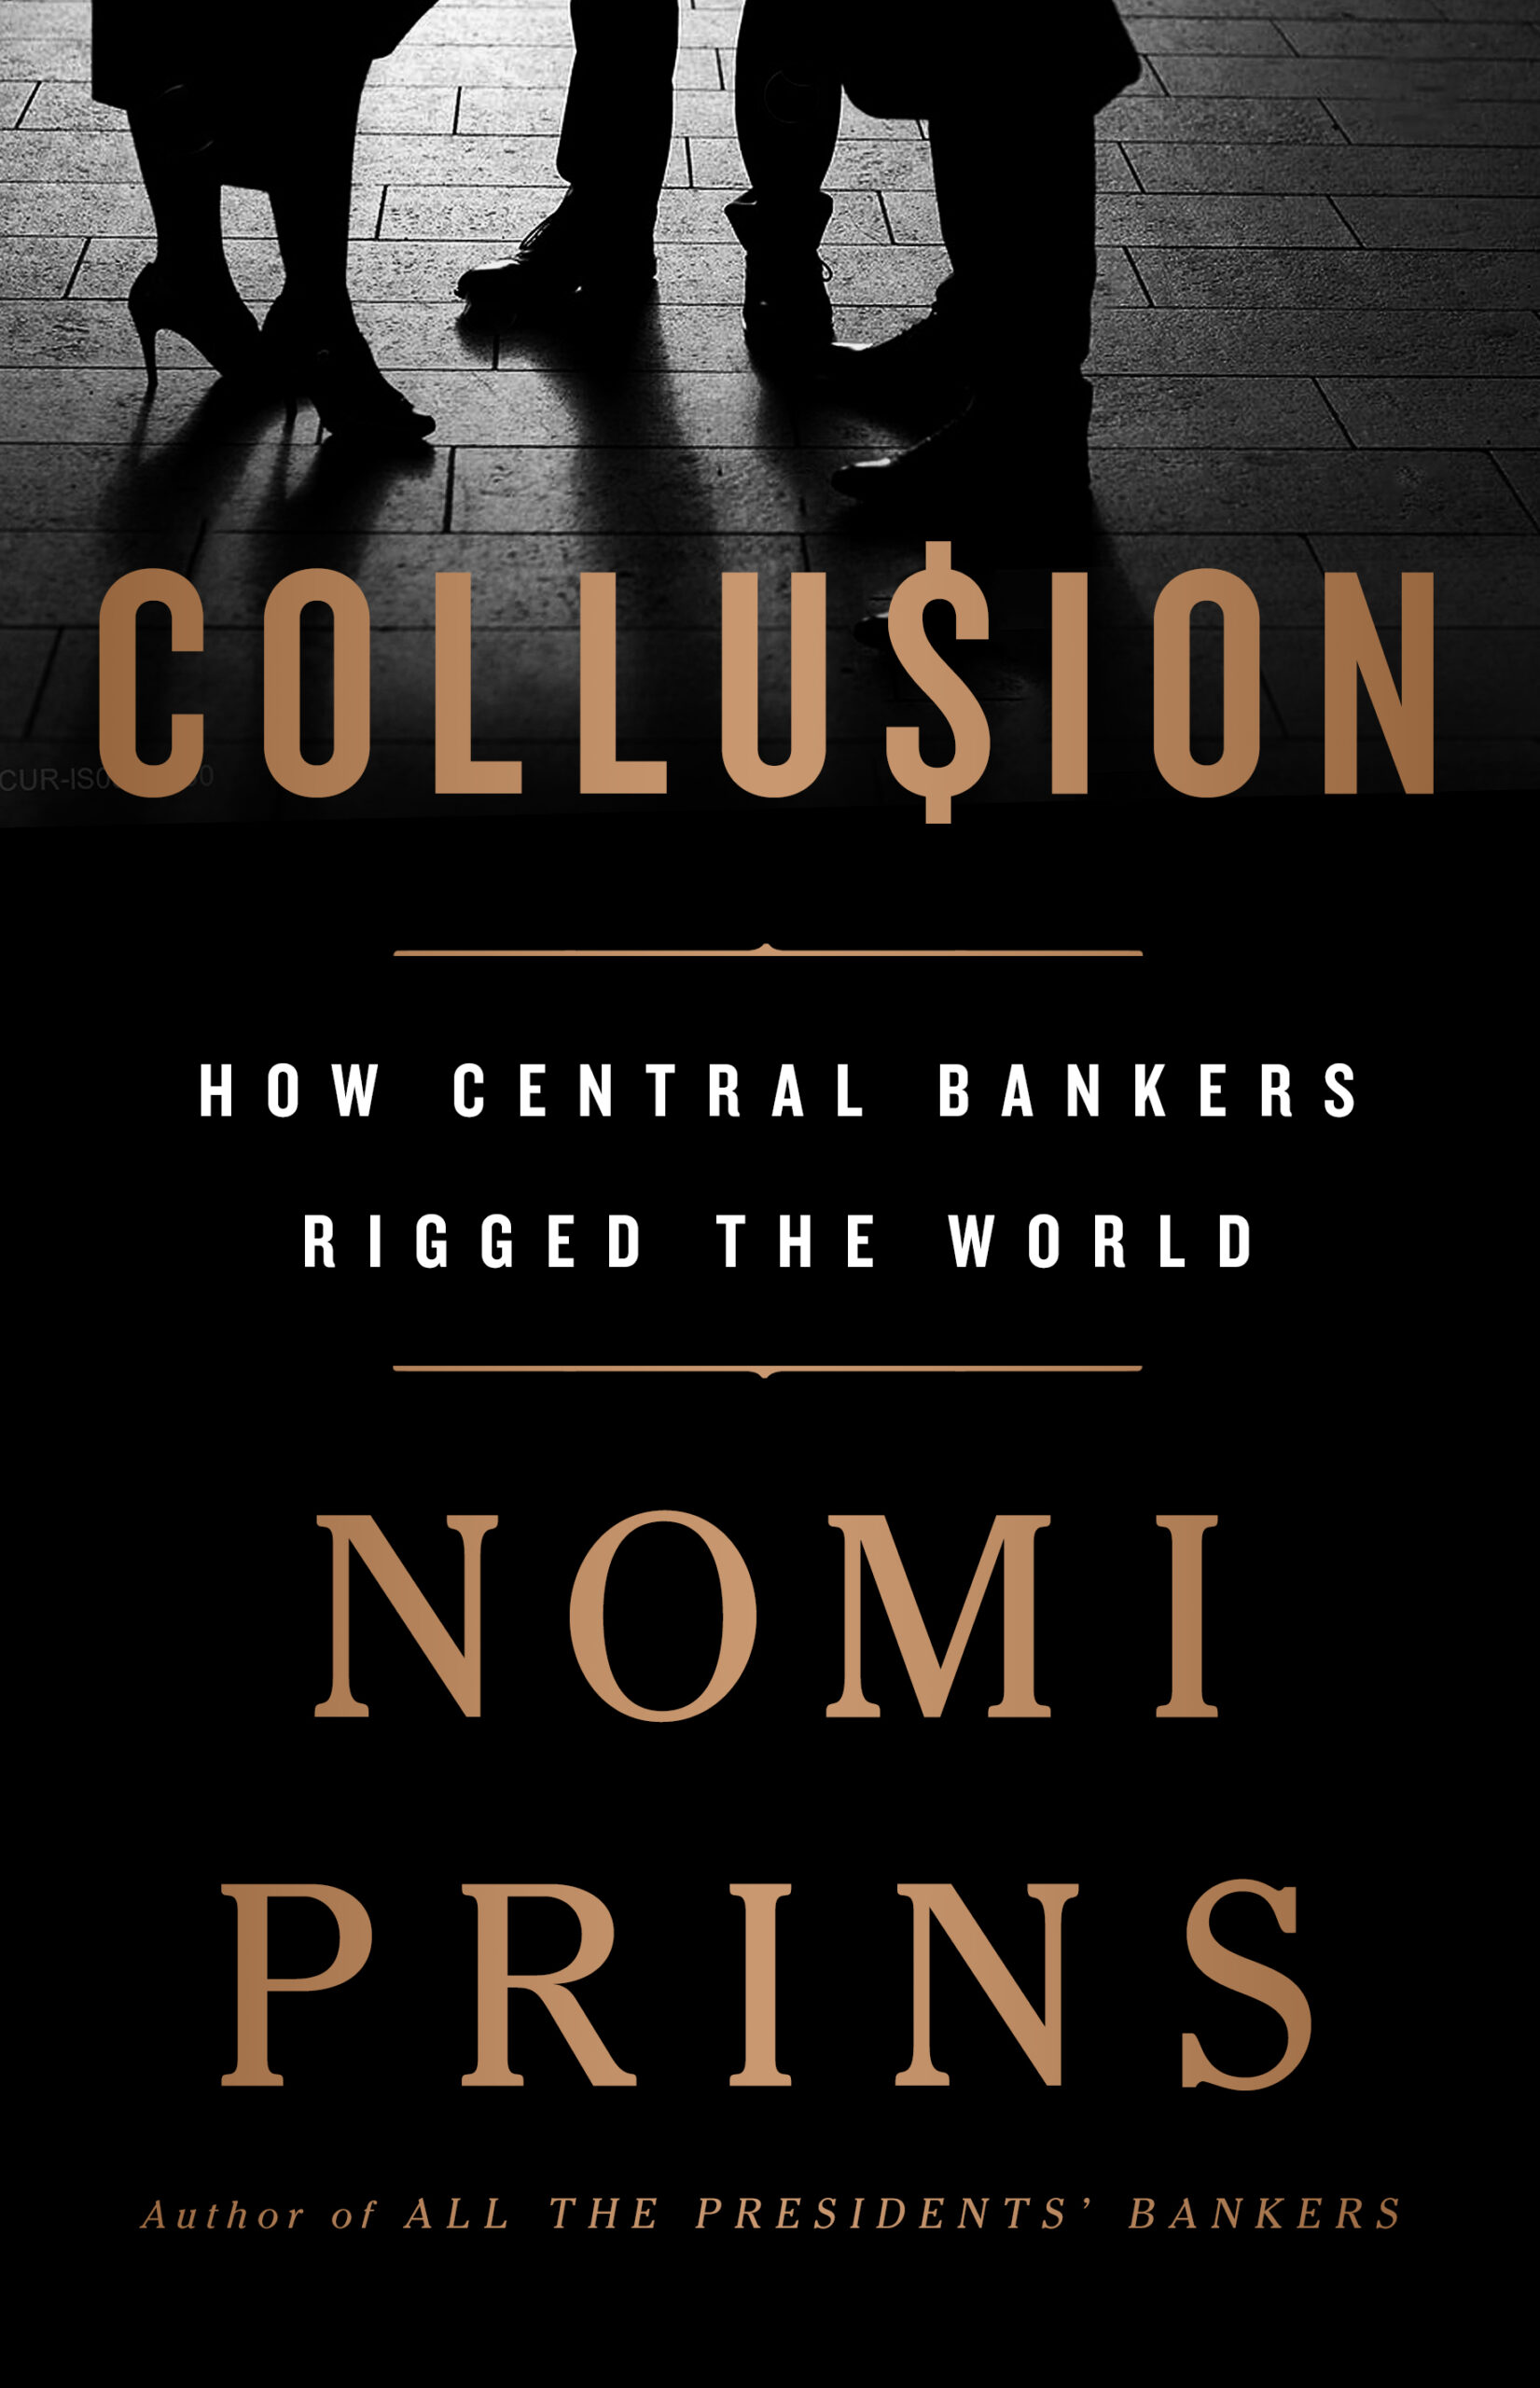 Collusion by Nomi Prins